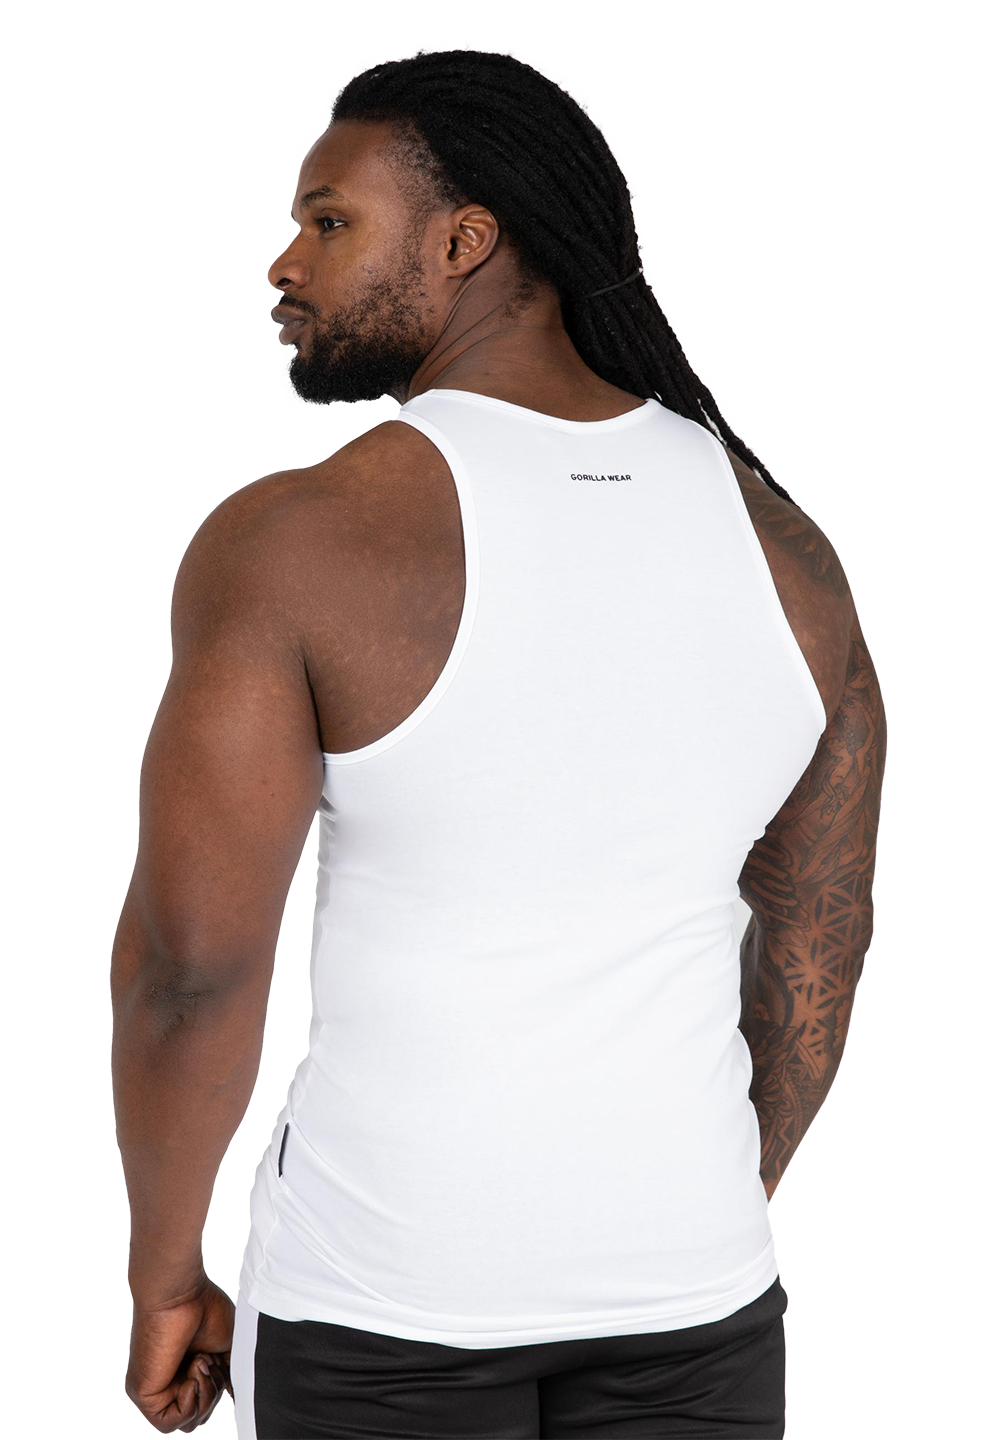 Майка Adams Stretch Tank Top – White от Gorilla Wear